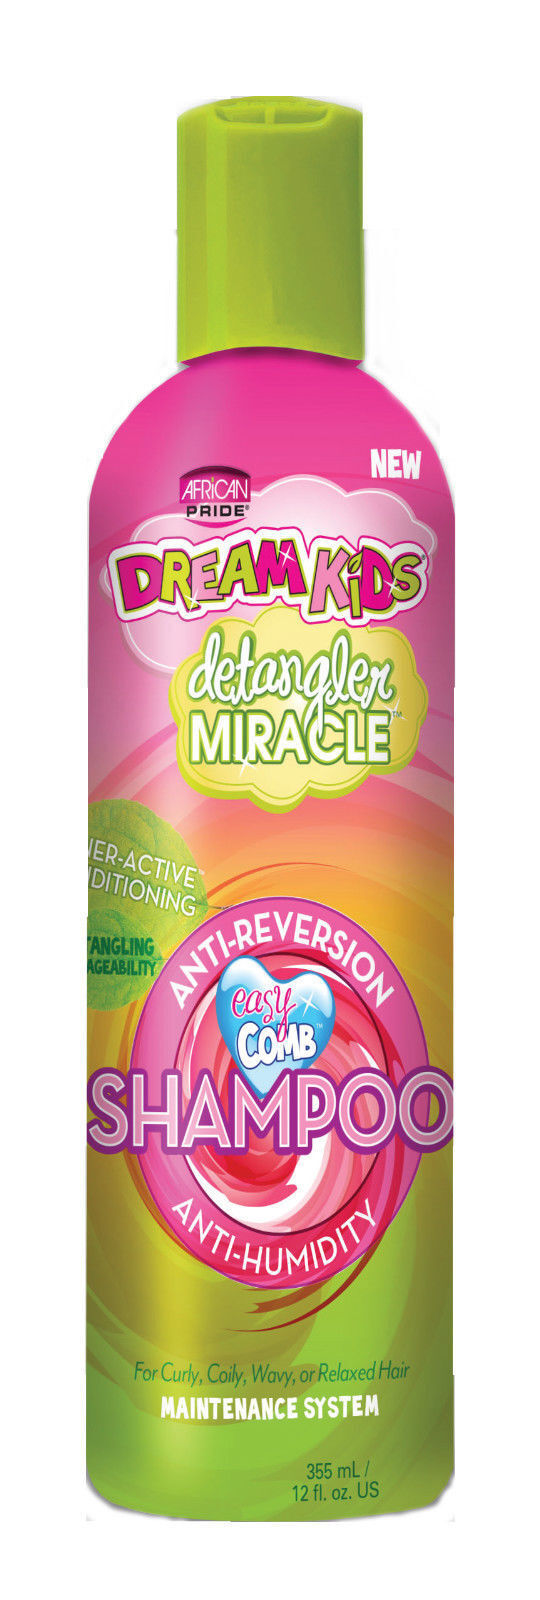 African Pride Dream Kids Detangler Miracle Anti Humidity& Reversion Shampo 355ml